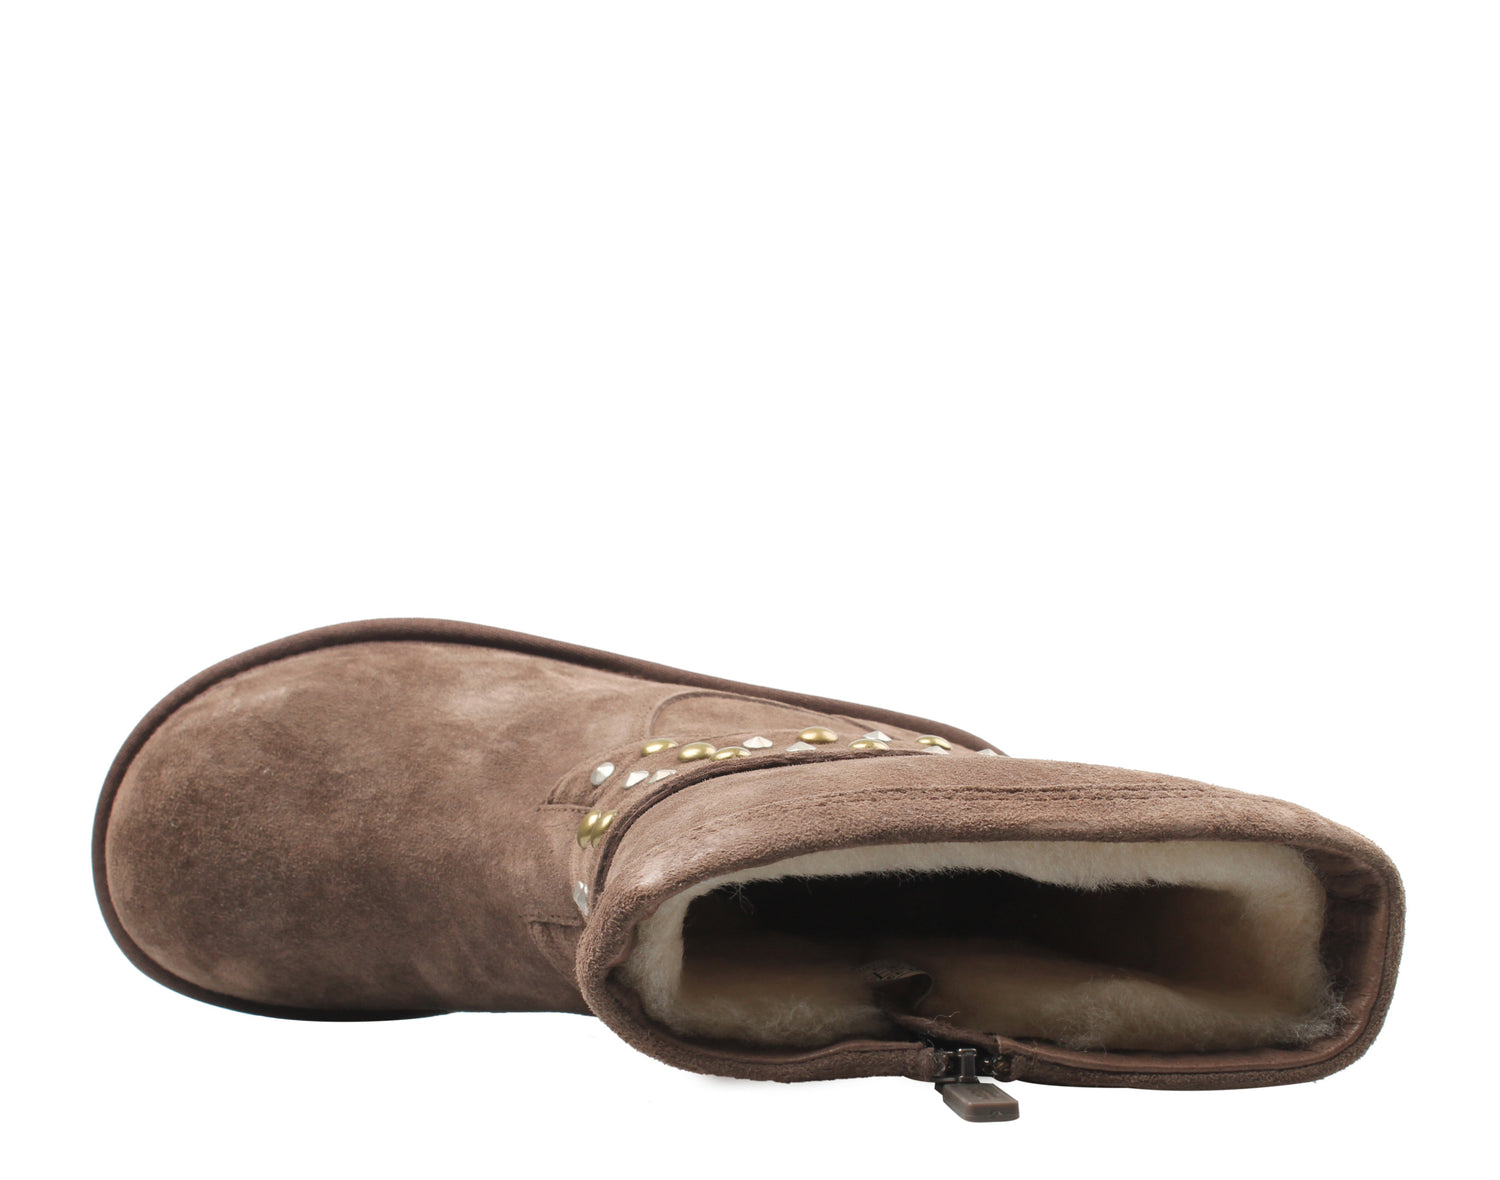 UGG Australia Clovis Women's Boots